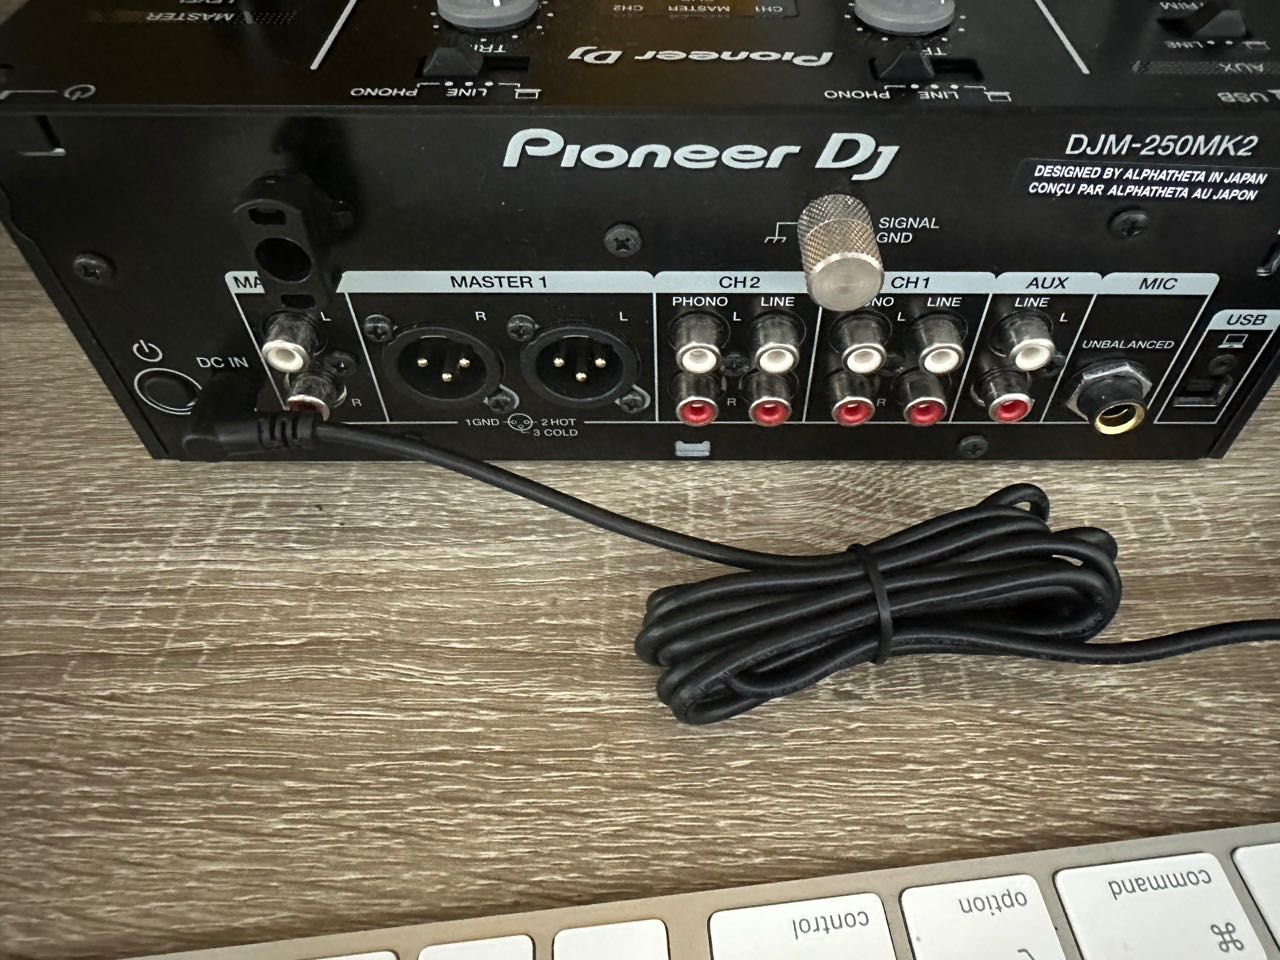 Pioneer Dj DJM-250mk2